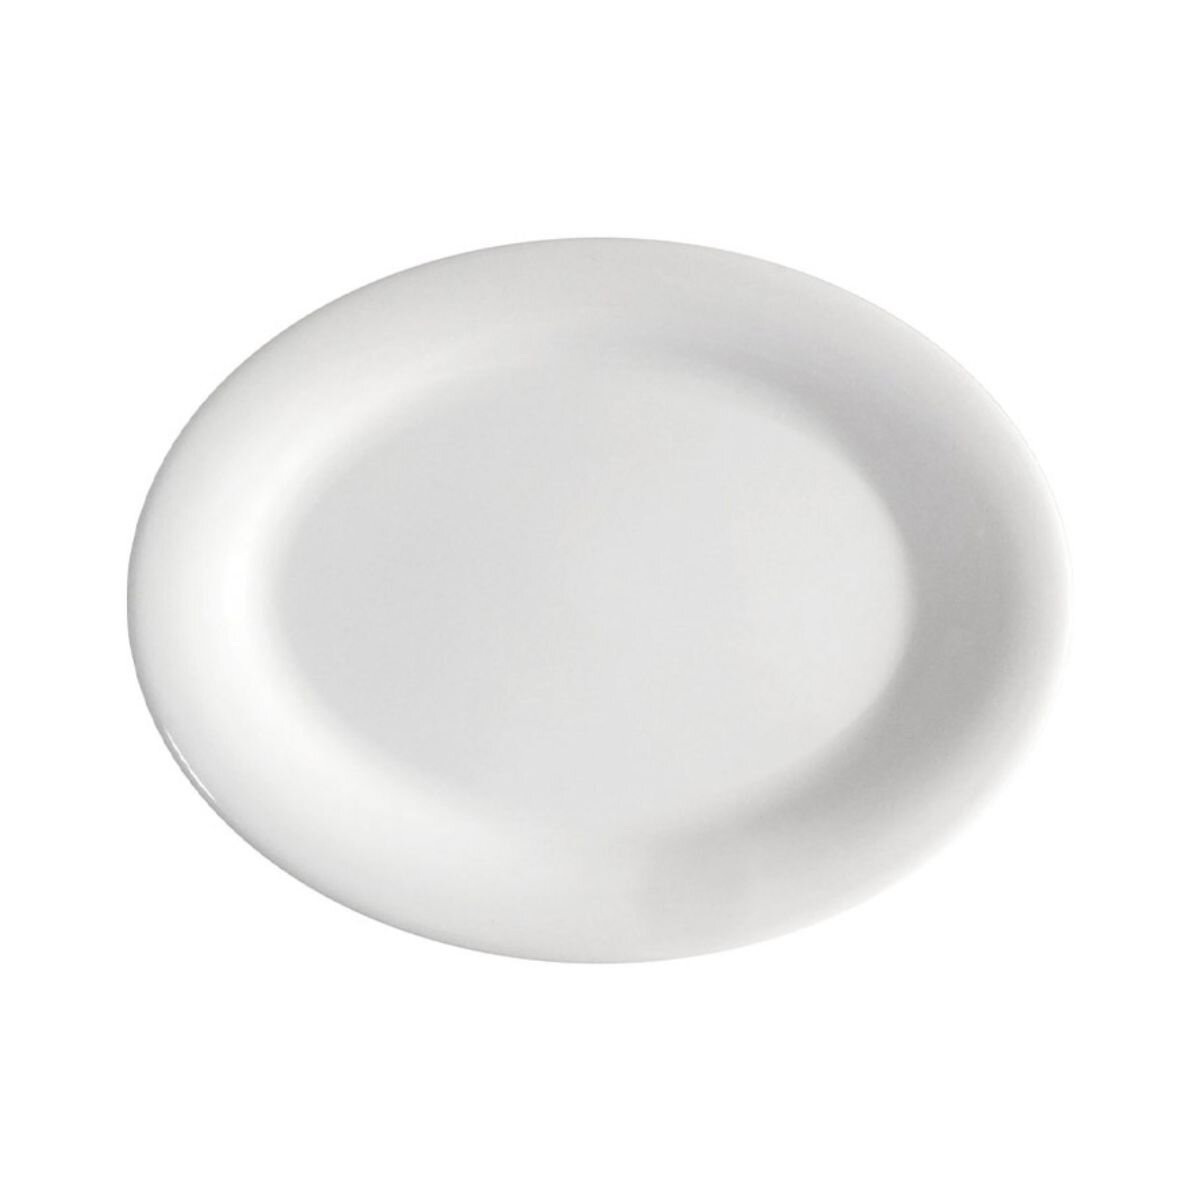 Plato Ovalado de 30.48 cm de Melamina Color Blanco